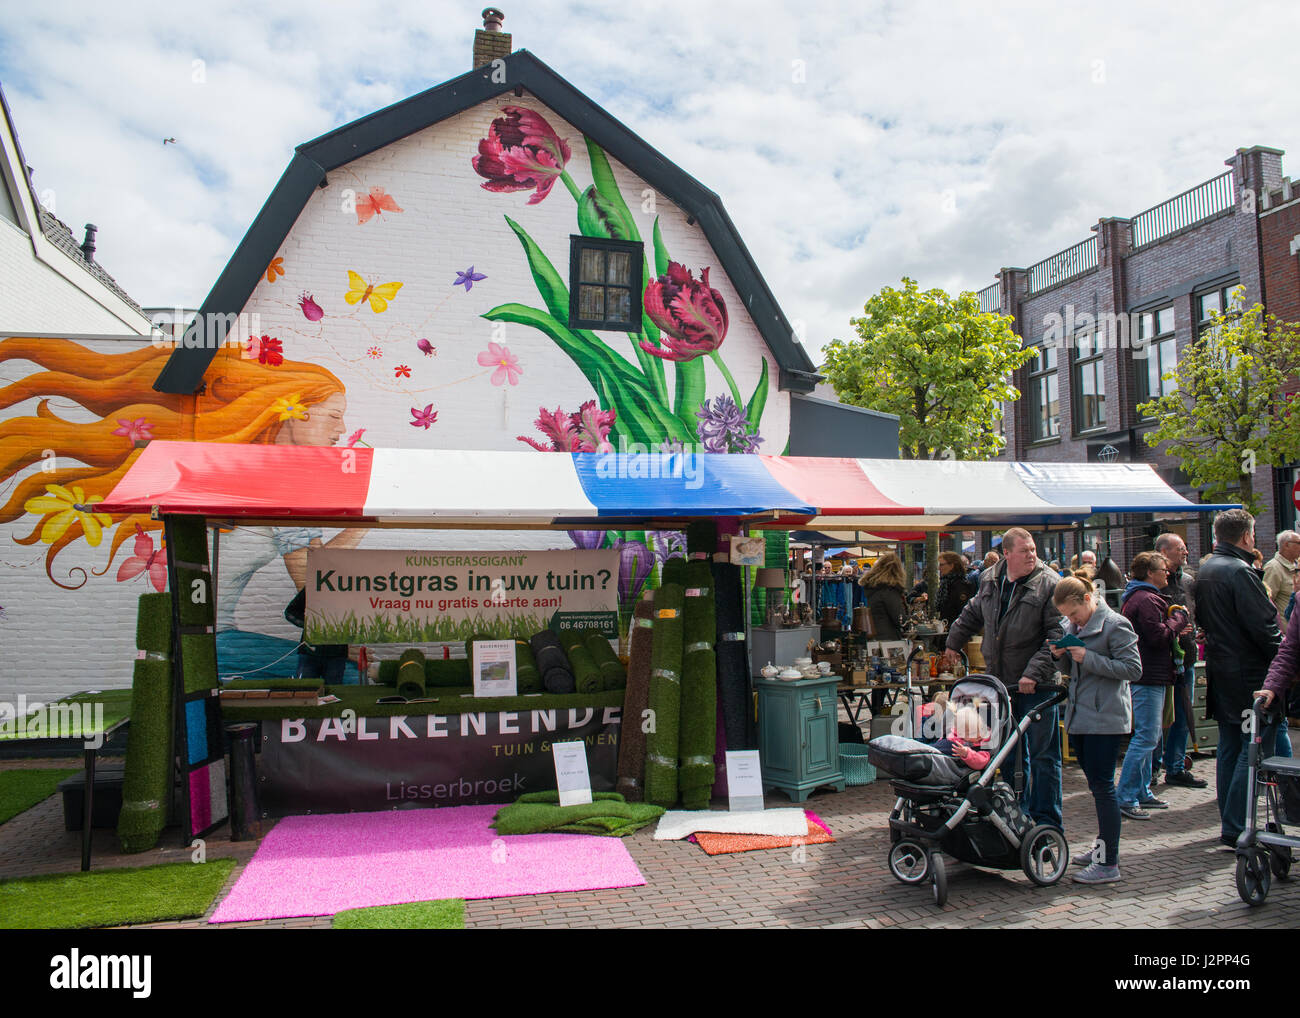 Street market in Lisse, Netherlands Stock Photo